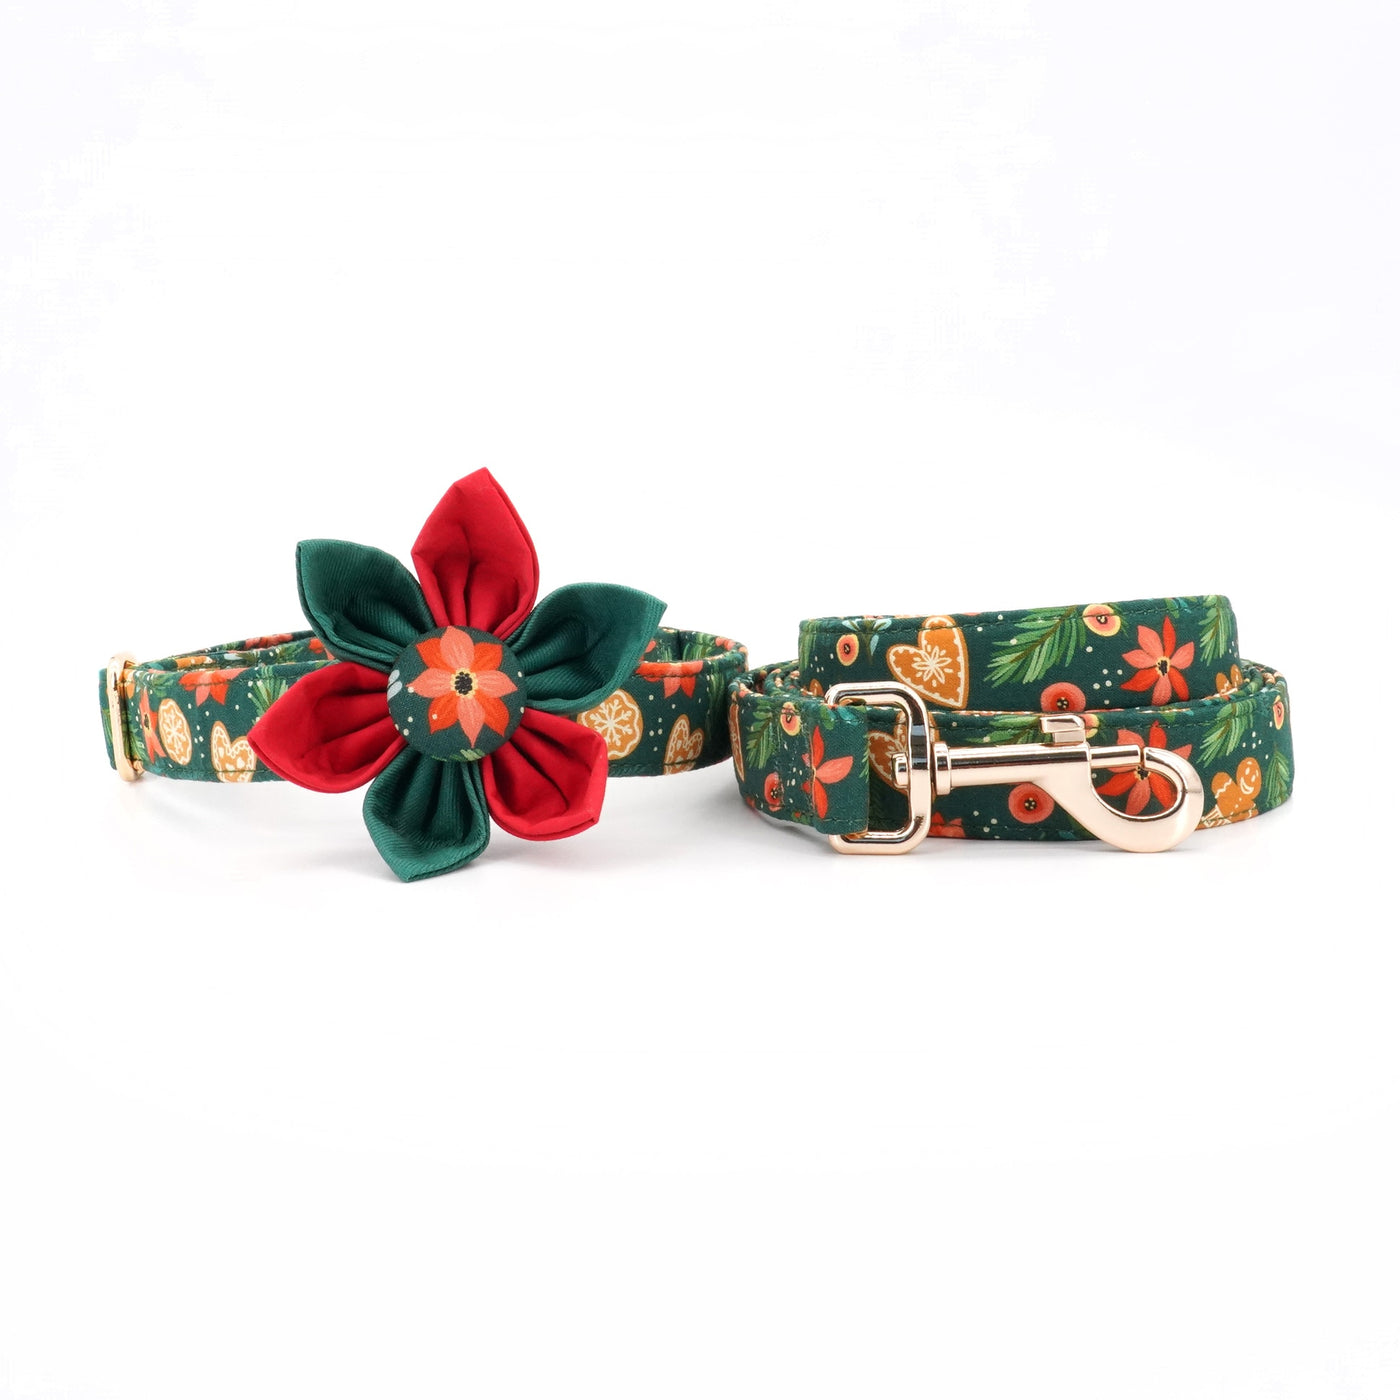 Poinsettia Pawliday Flower Collar & Leash Set